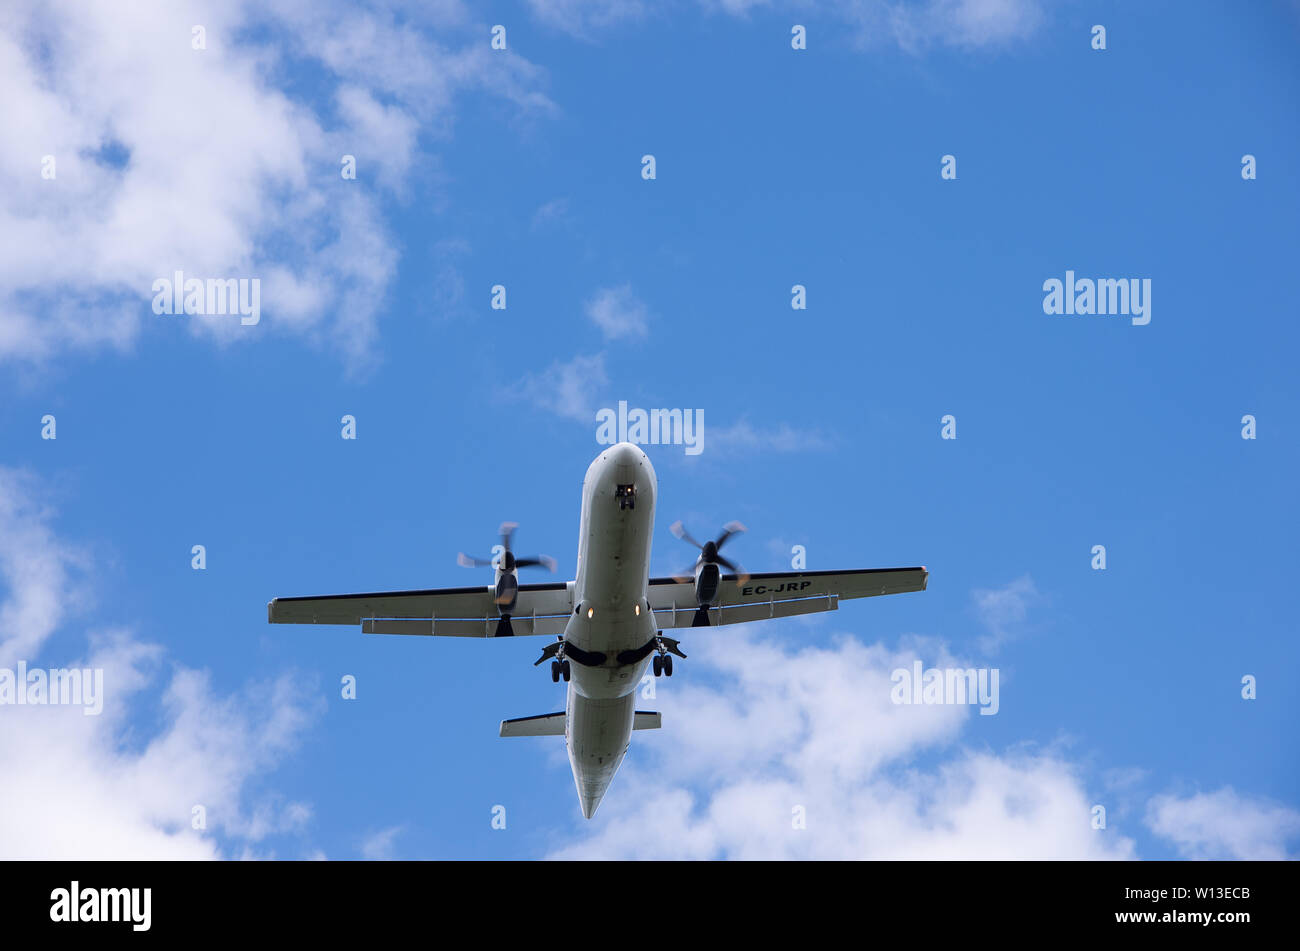 ATR-72 Aerei de Transporto Regionale ; EG-JRP Landung Flughafen Sofia SOF; Fahrwerk; Turboprop-flugzeuge Landung am Flughafen Sofia Stockfoto